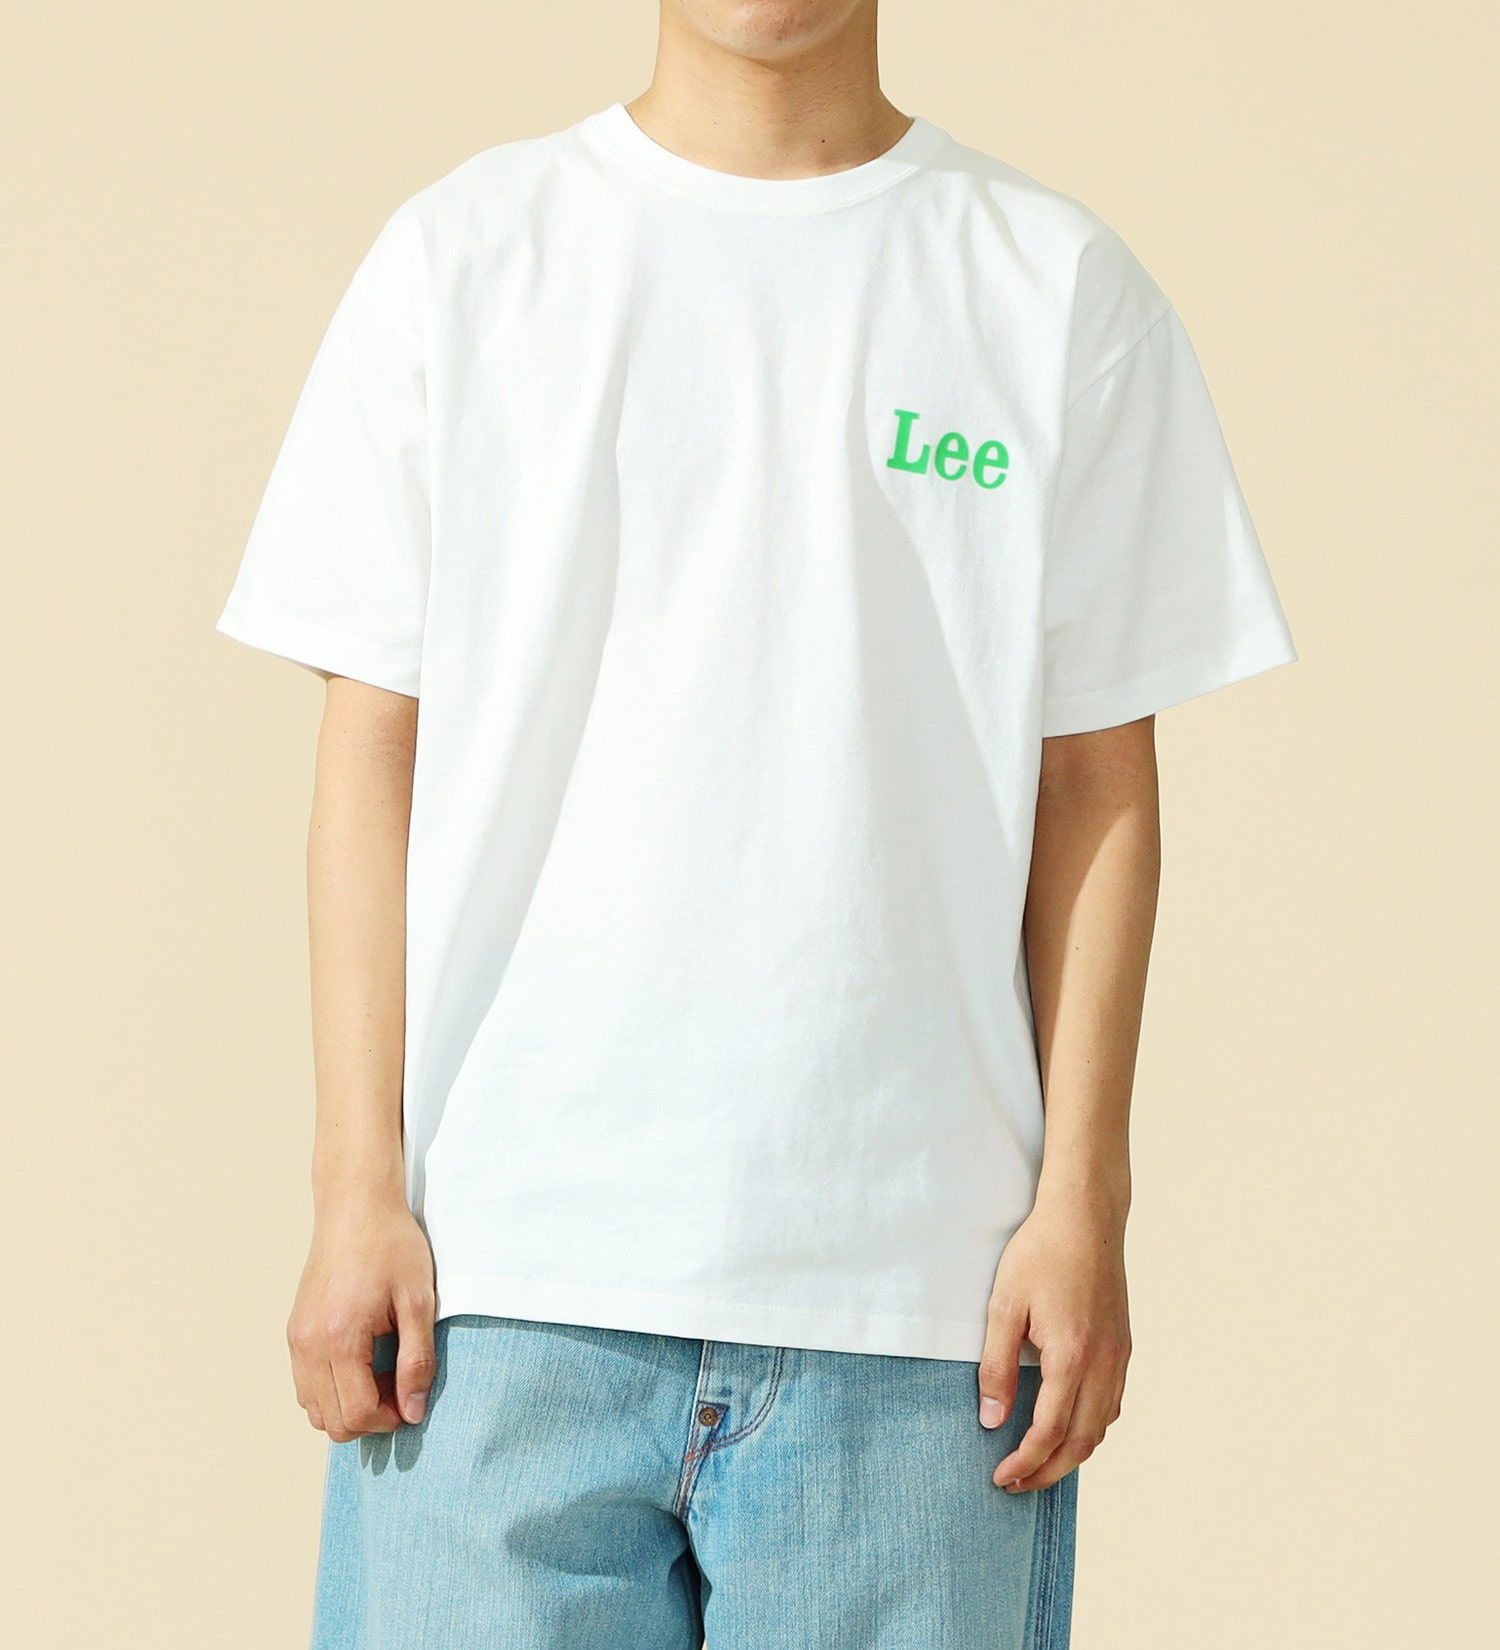 Lee(リー)の【GW SALE】ブルドッグ フロッキープリント ショートスリーブTee|トップス/Tシャツ/カットソー/メンズ|ホワイト